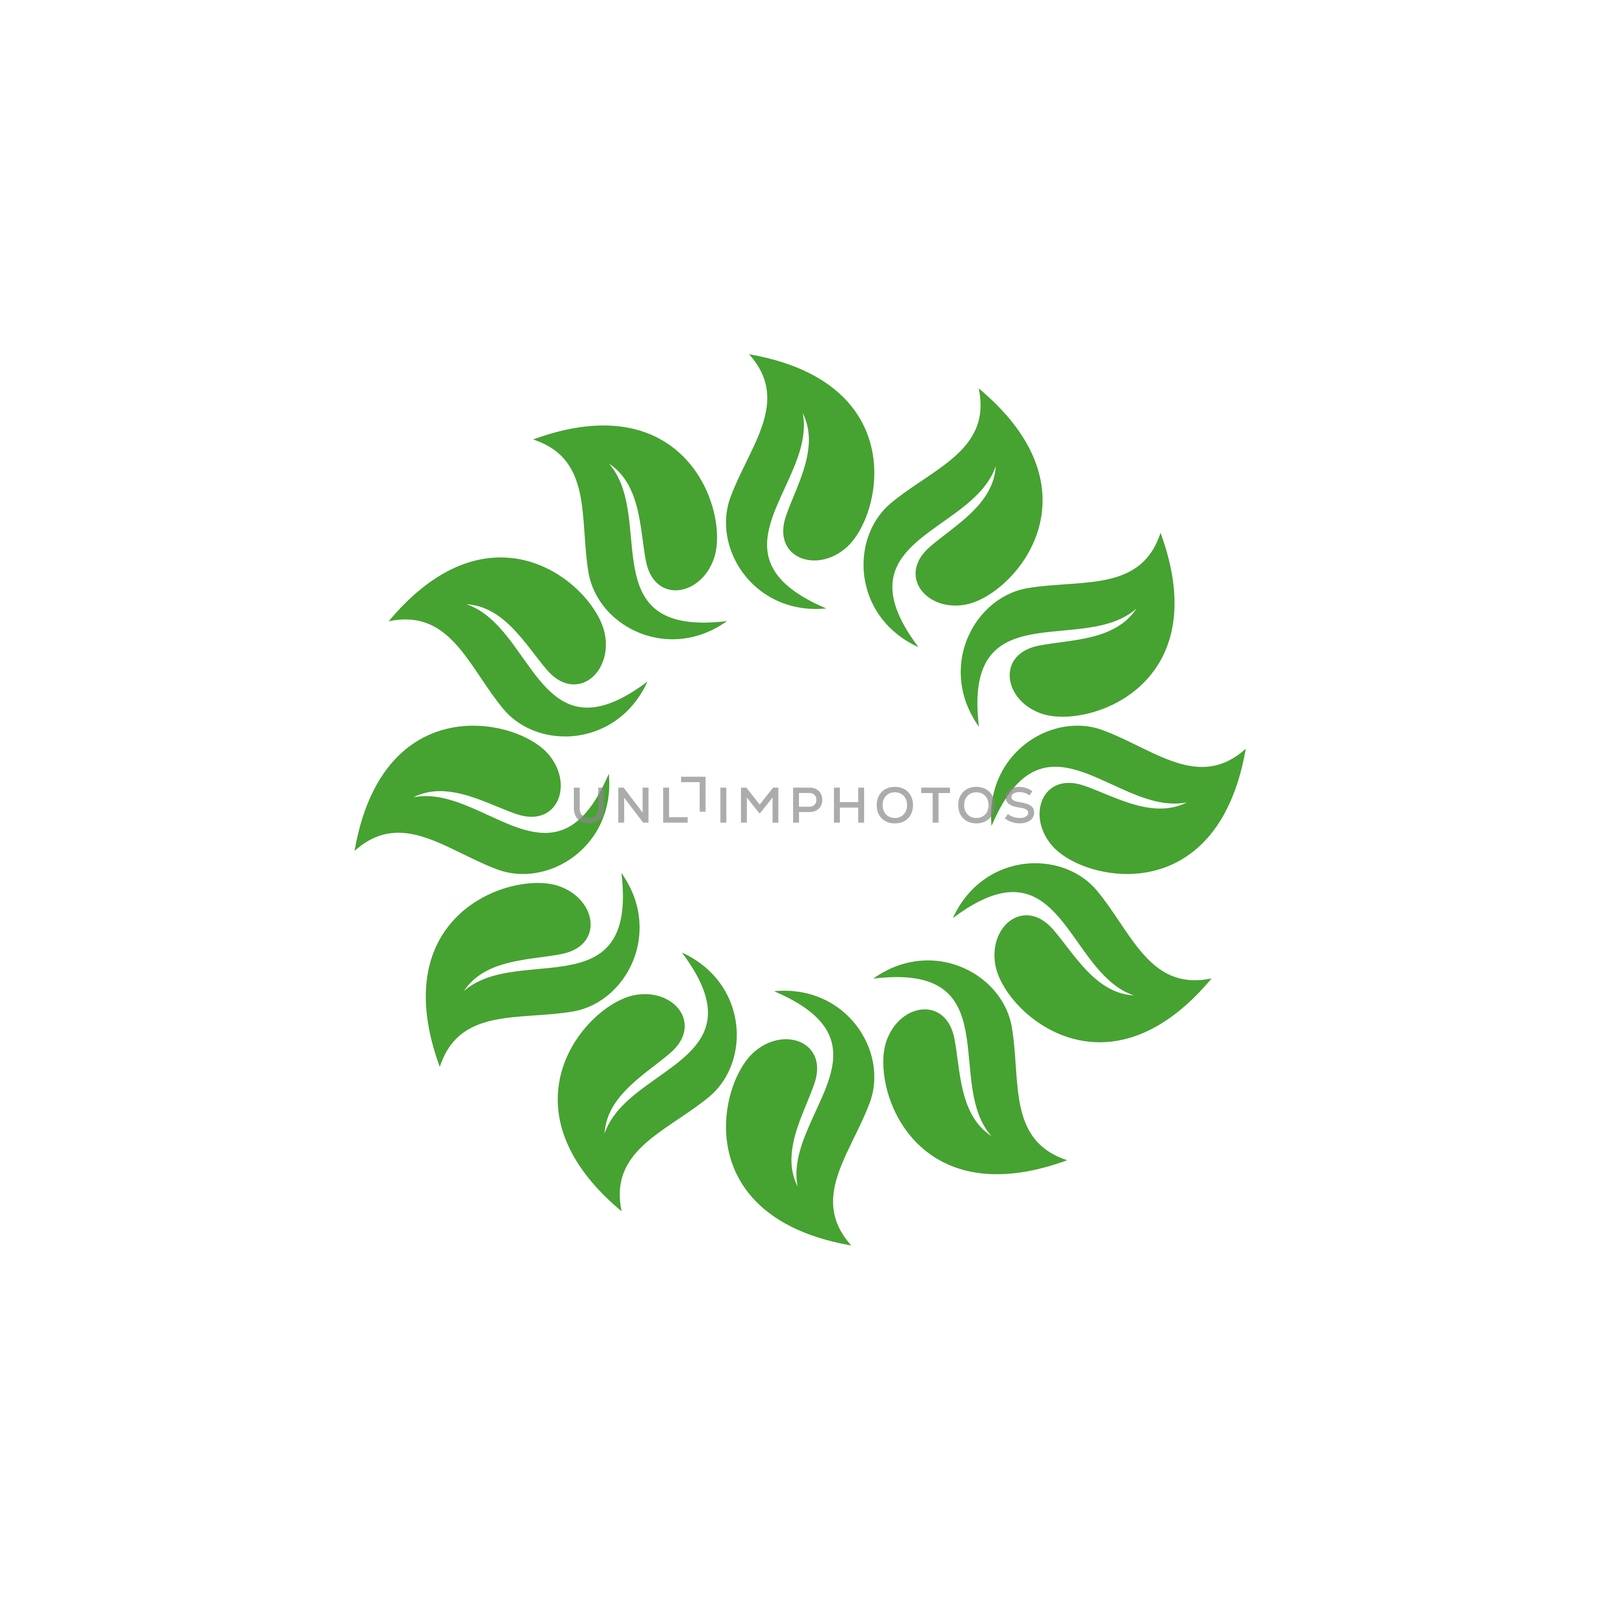 Natural Spa Flower Ornament Logo Template Illustration Design. Vector EPS 10.